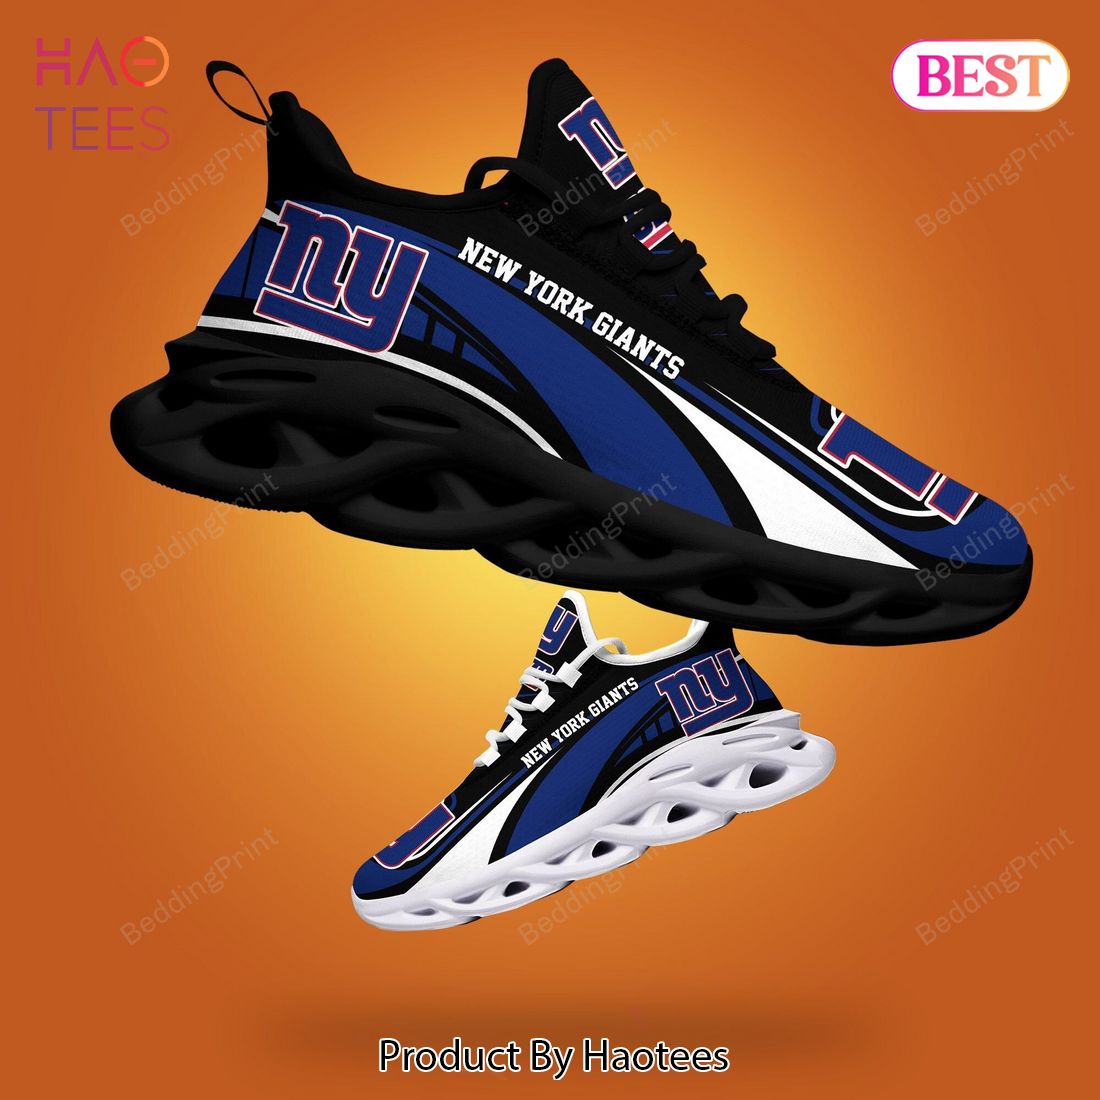 New York Giants NFL Blue Black Color Max Soul Shoes